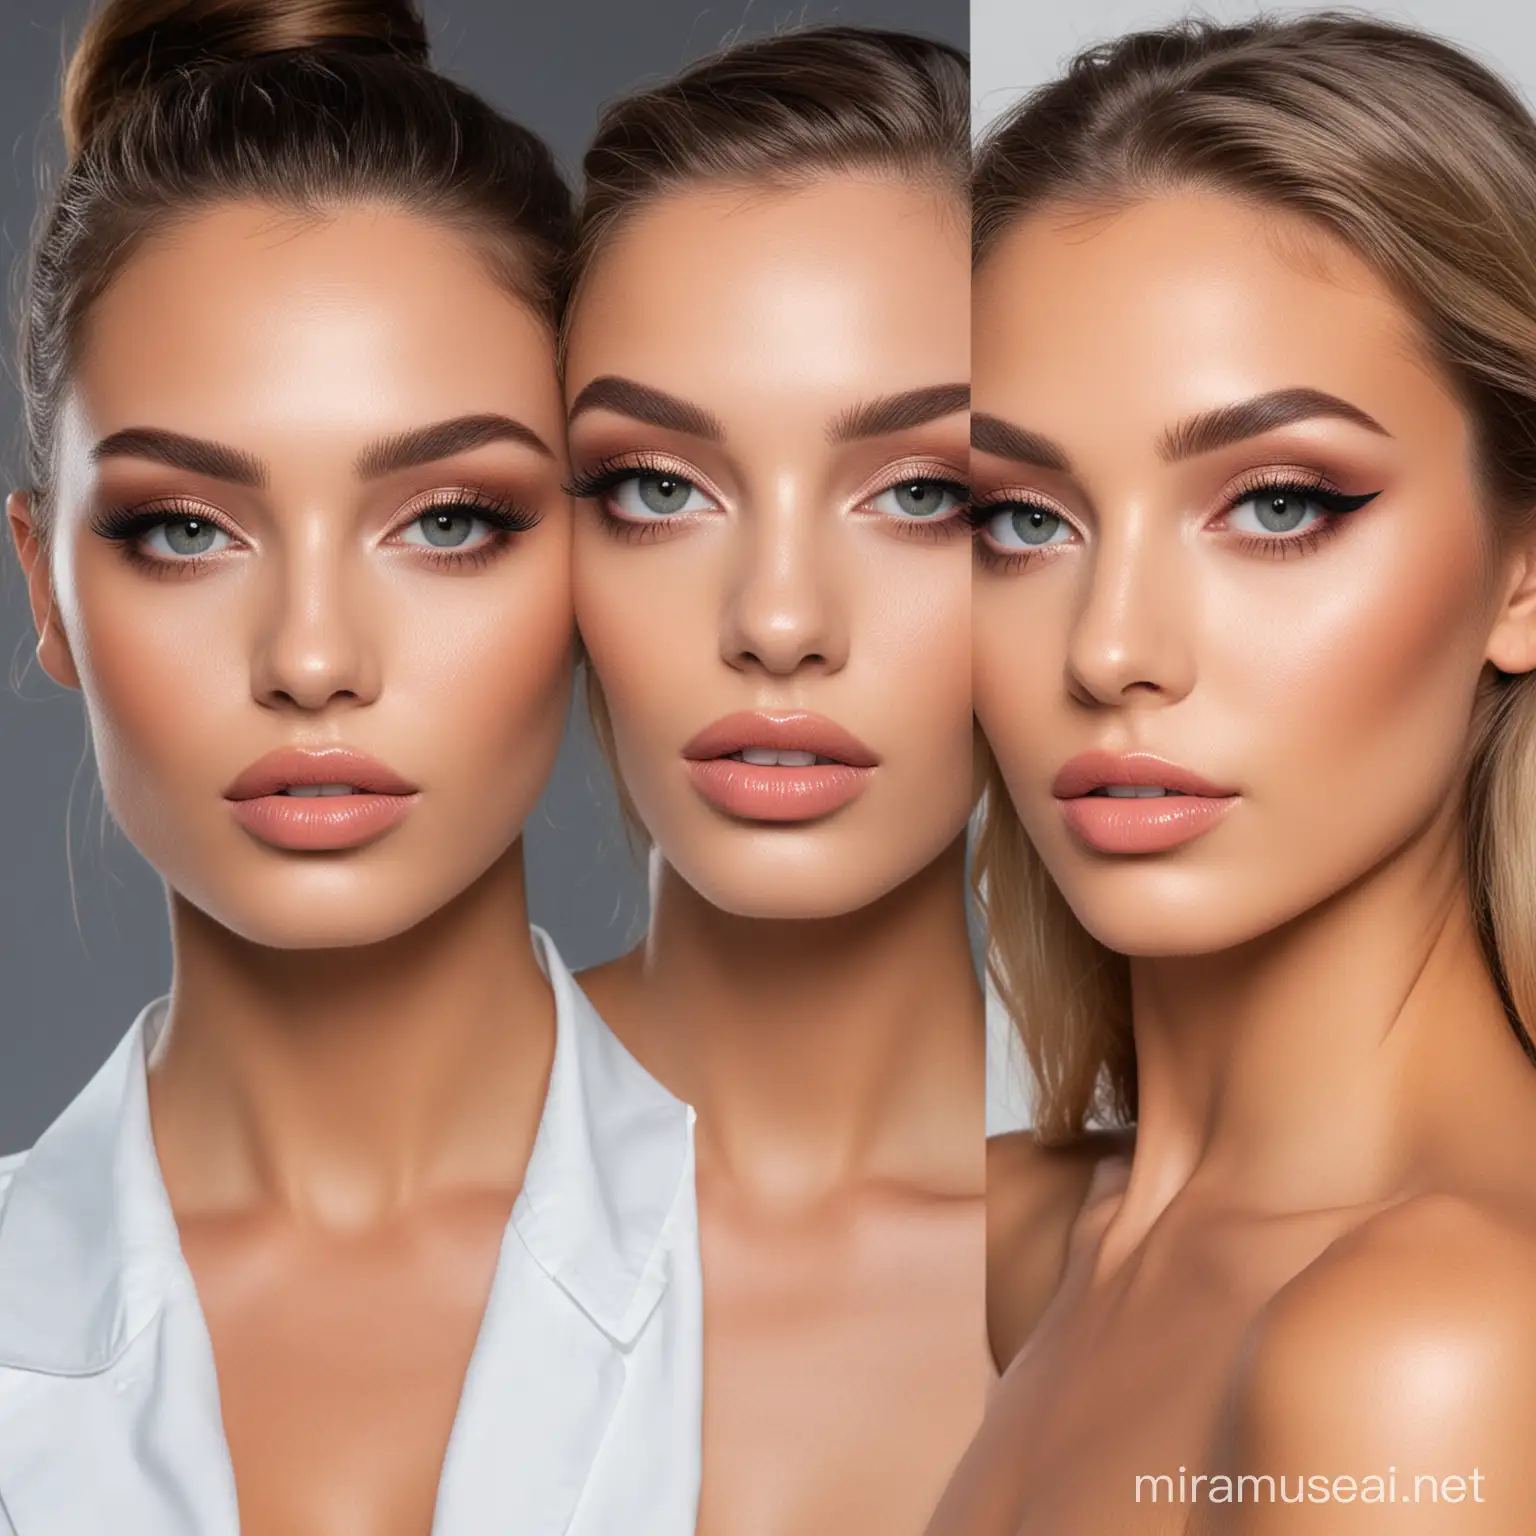 Glamorous European and American Makeup Models Showcasing Diverse Looks